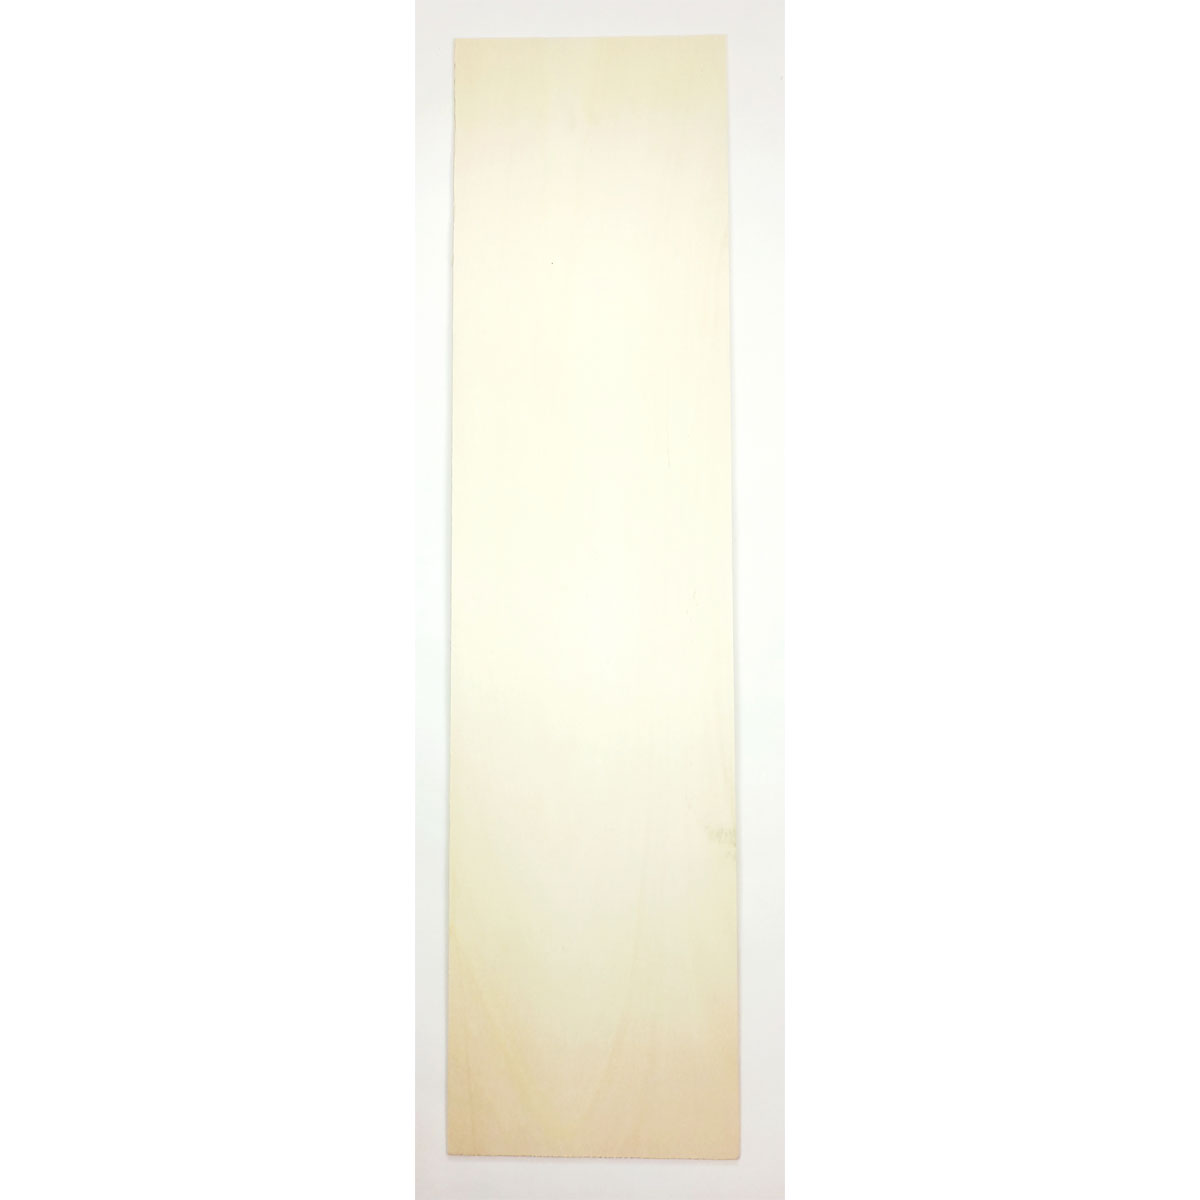 Modellbausperrholz, Pappel, 100x50x0,3 cm